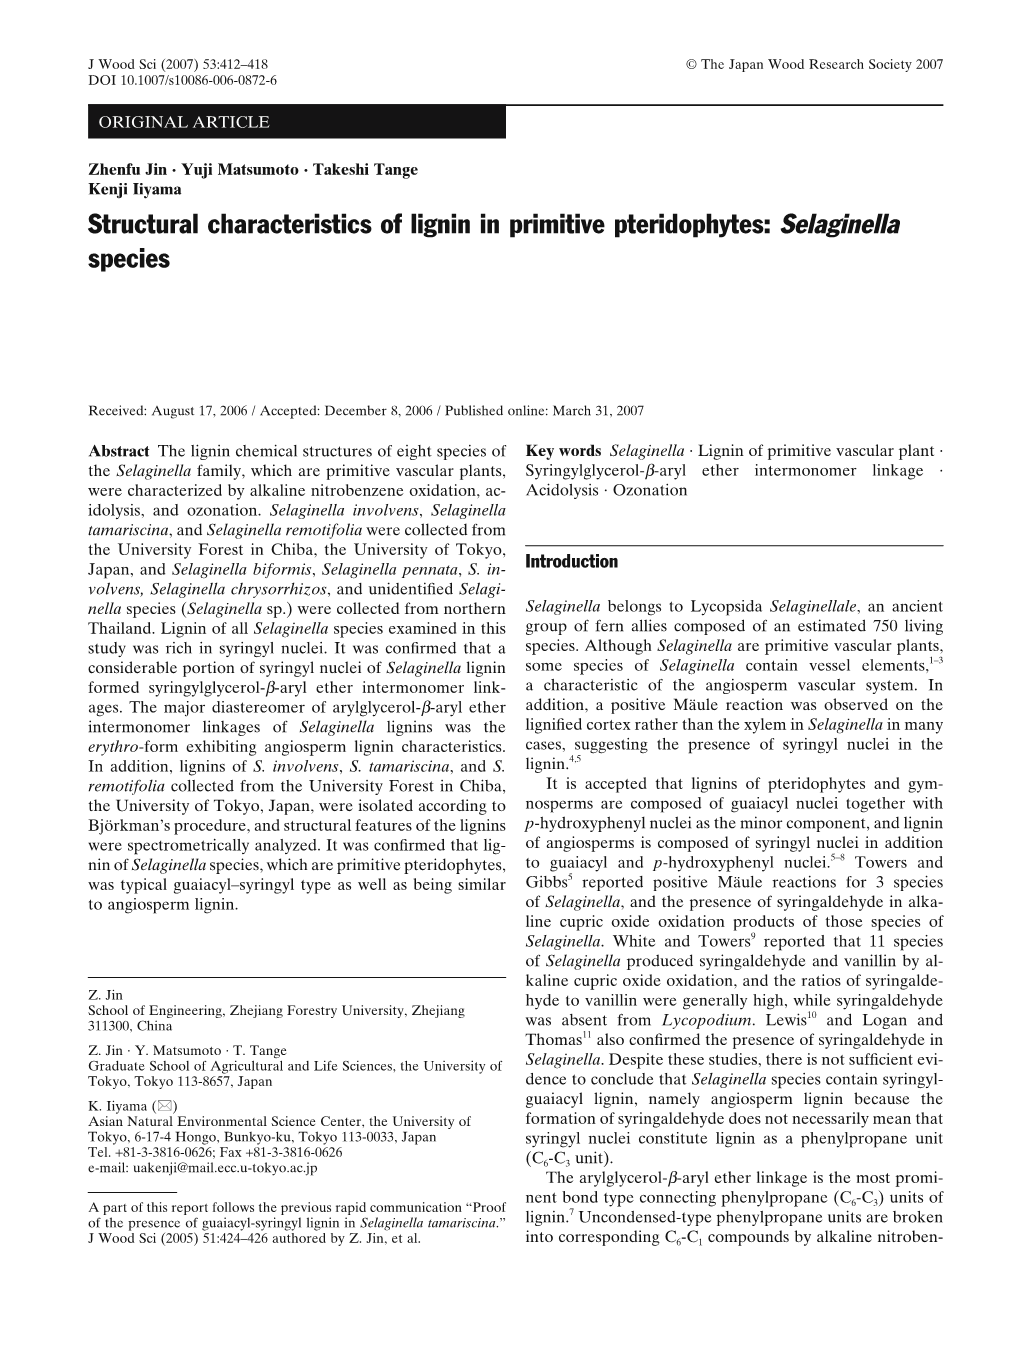 Structural Characteristics of Lignin in Primitive Pteridophytes: &lt;Emphasis